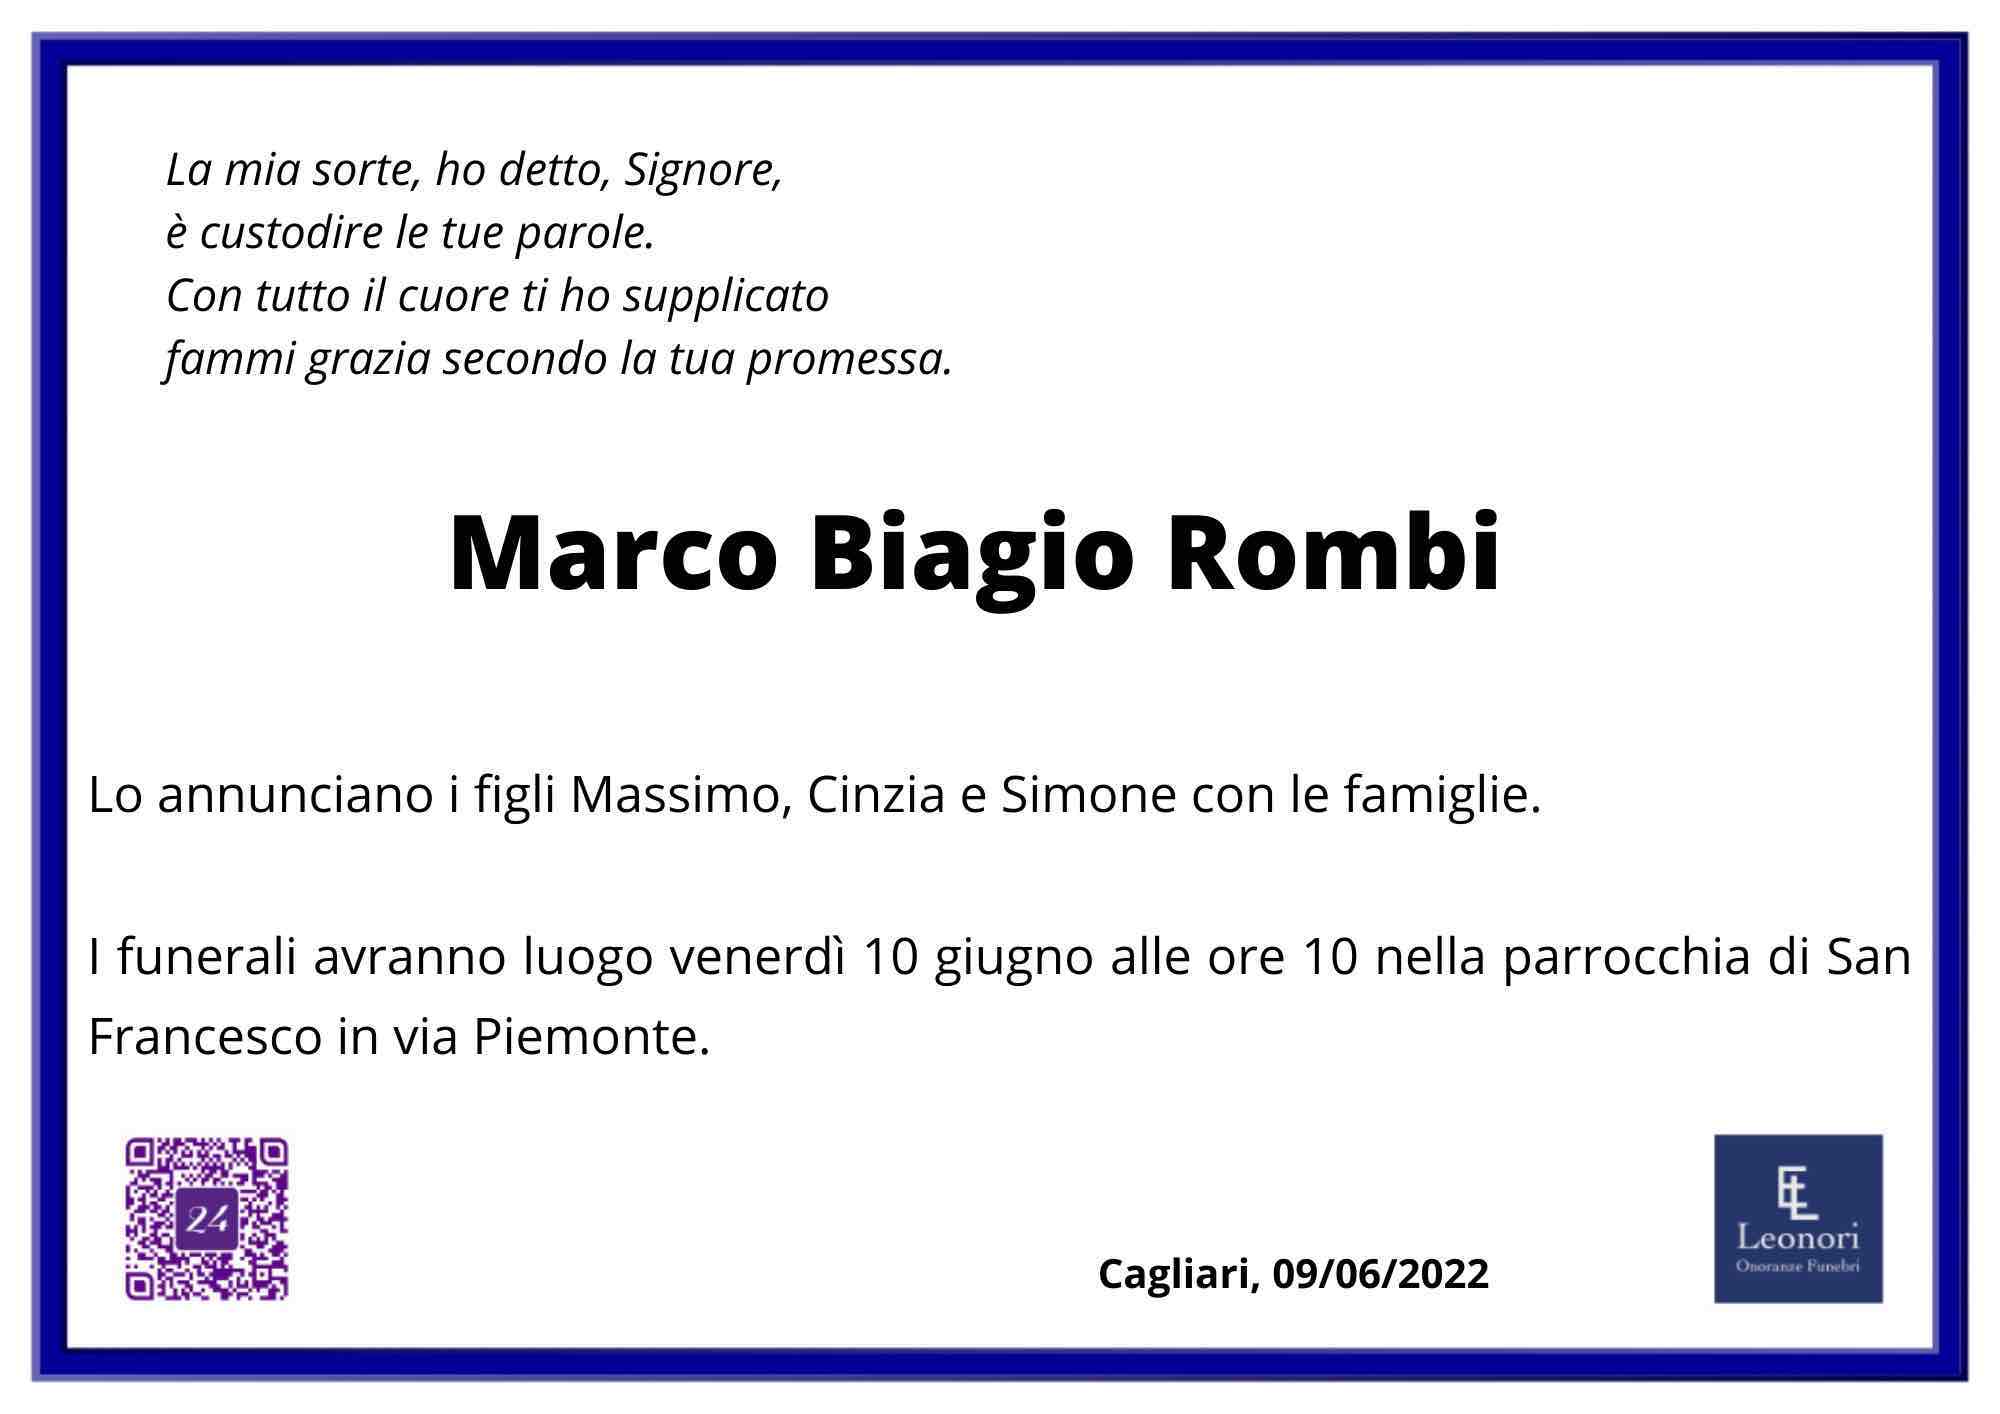 Marco Biagio Rombi